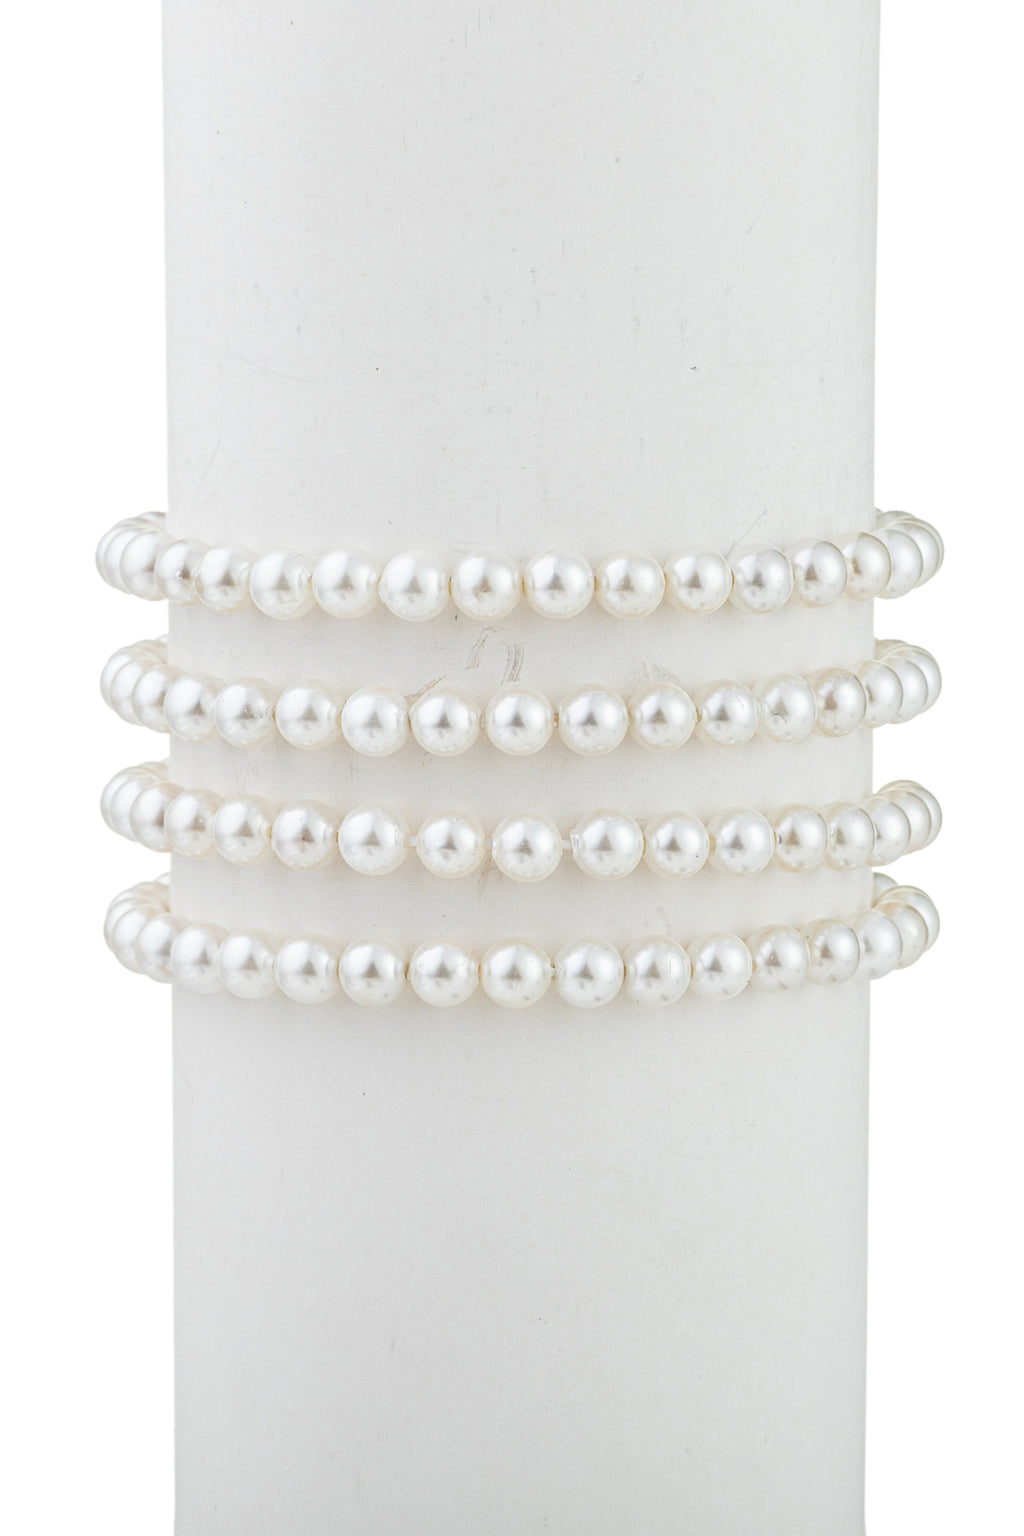 4 piece shell pearl bracelet set.